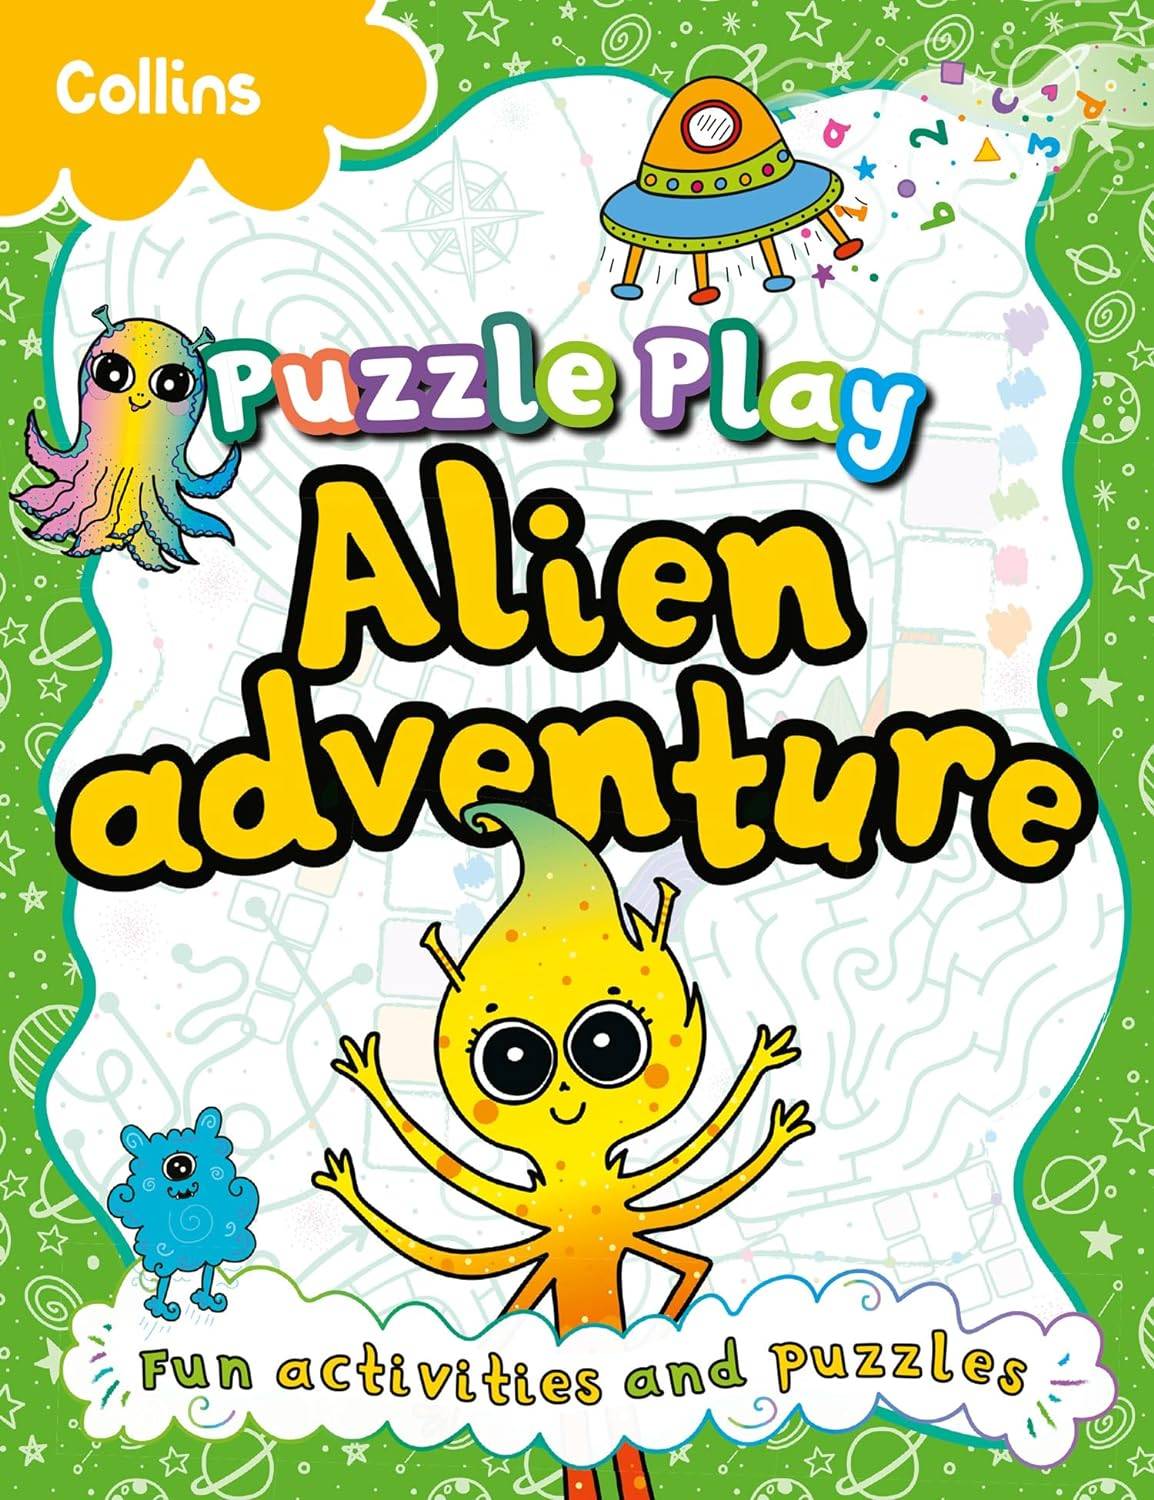 Puzzle Play Alien Adventure (Puzzle Pals) by Kia Marie Hunt for Collins Kids - Alien activity book for kids